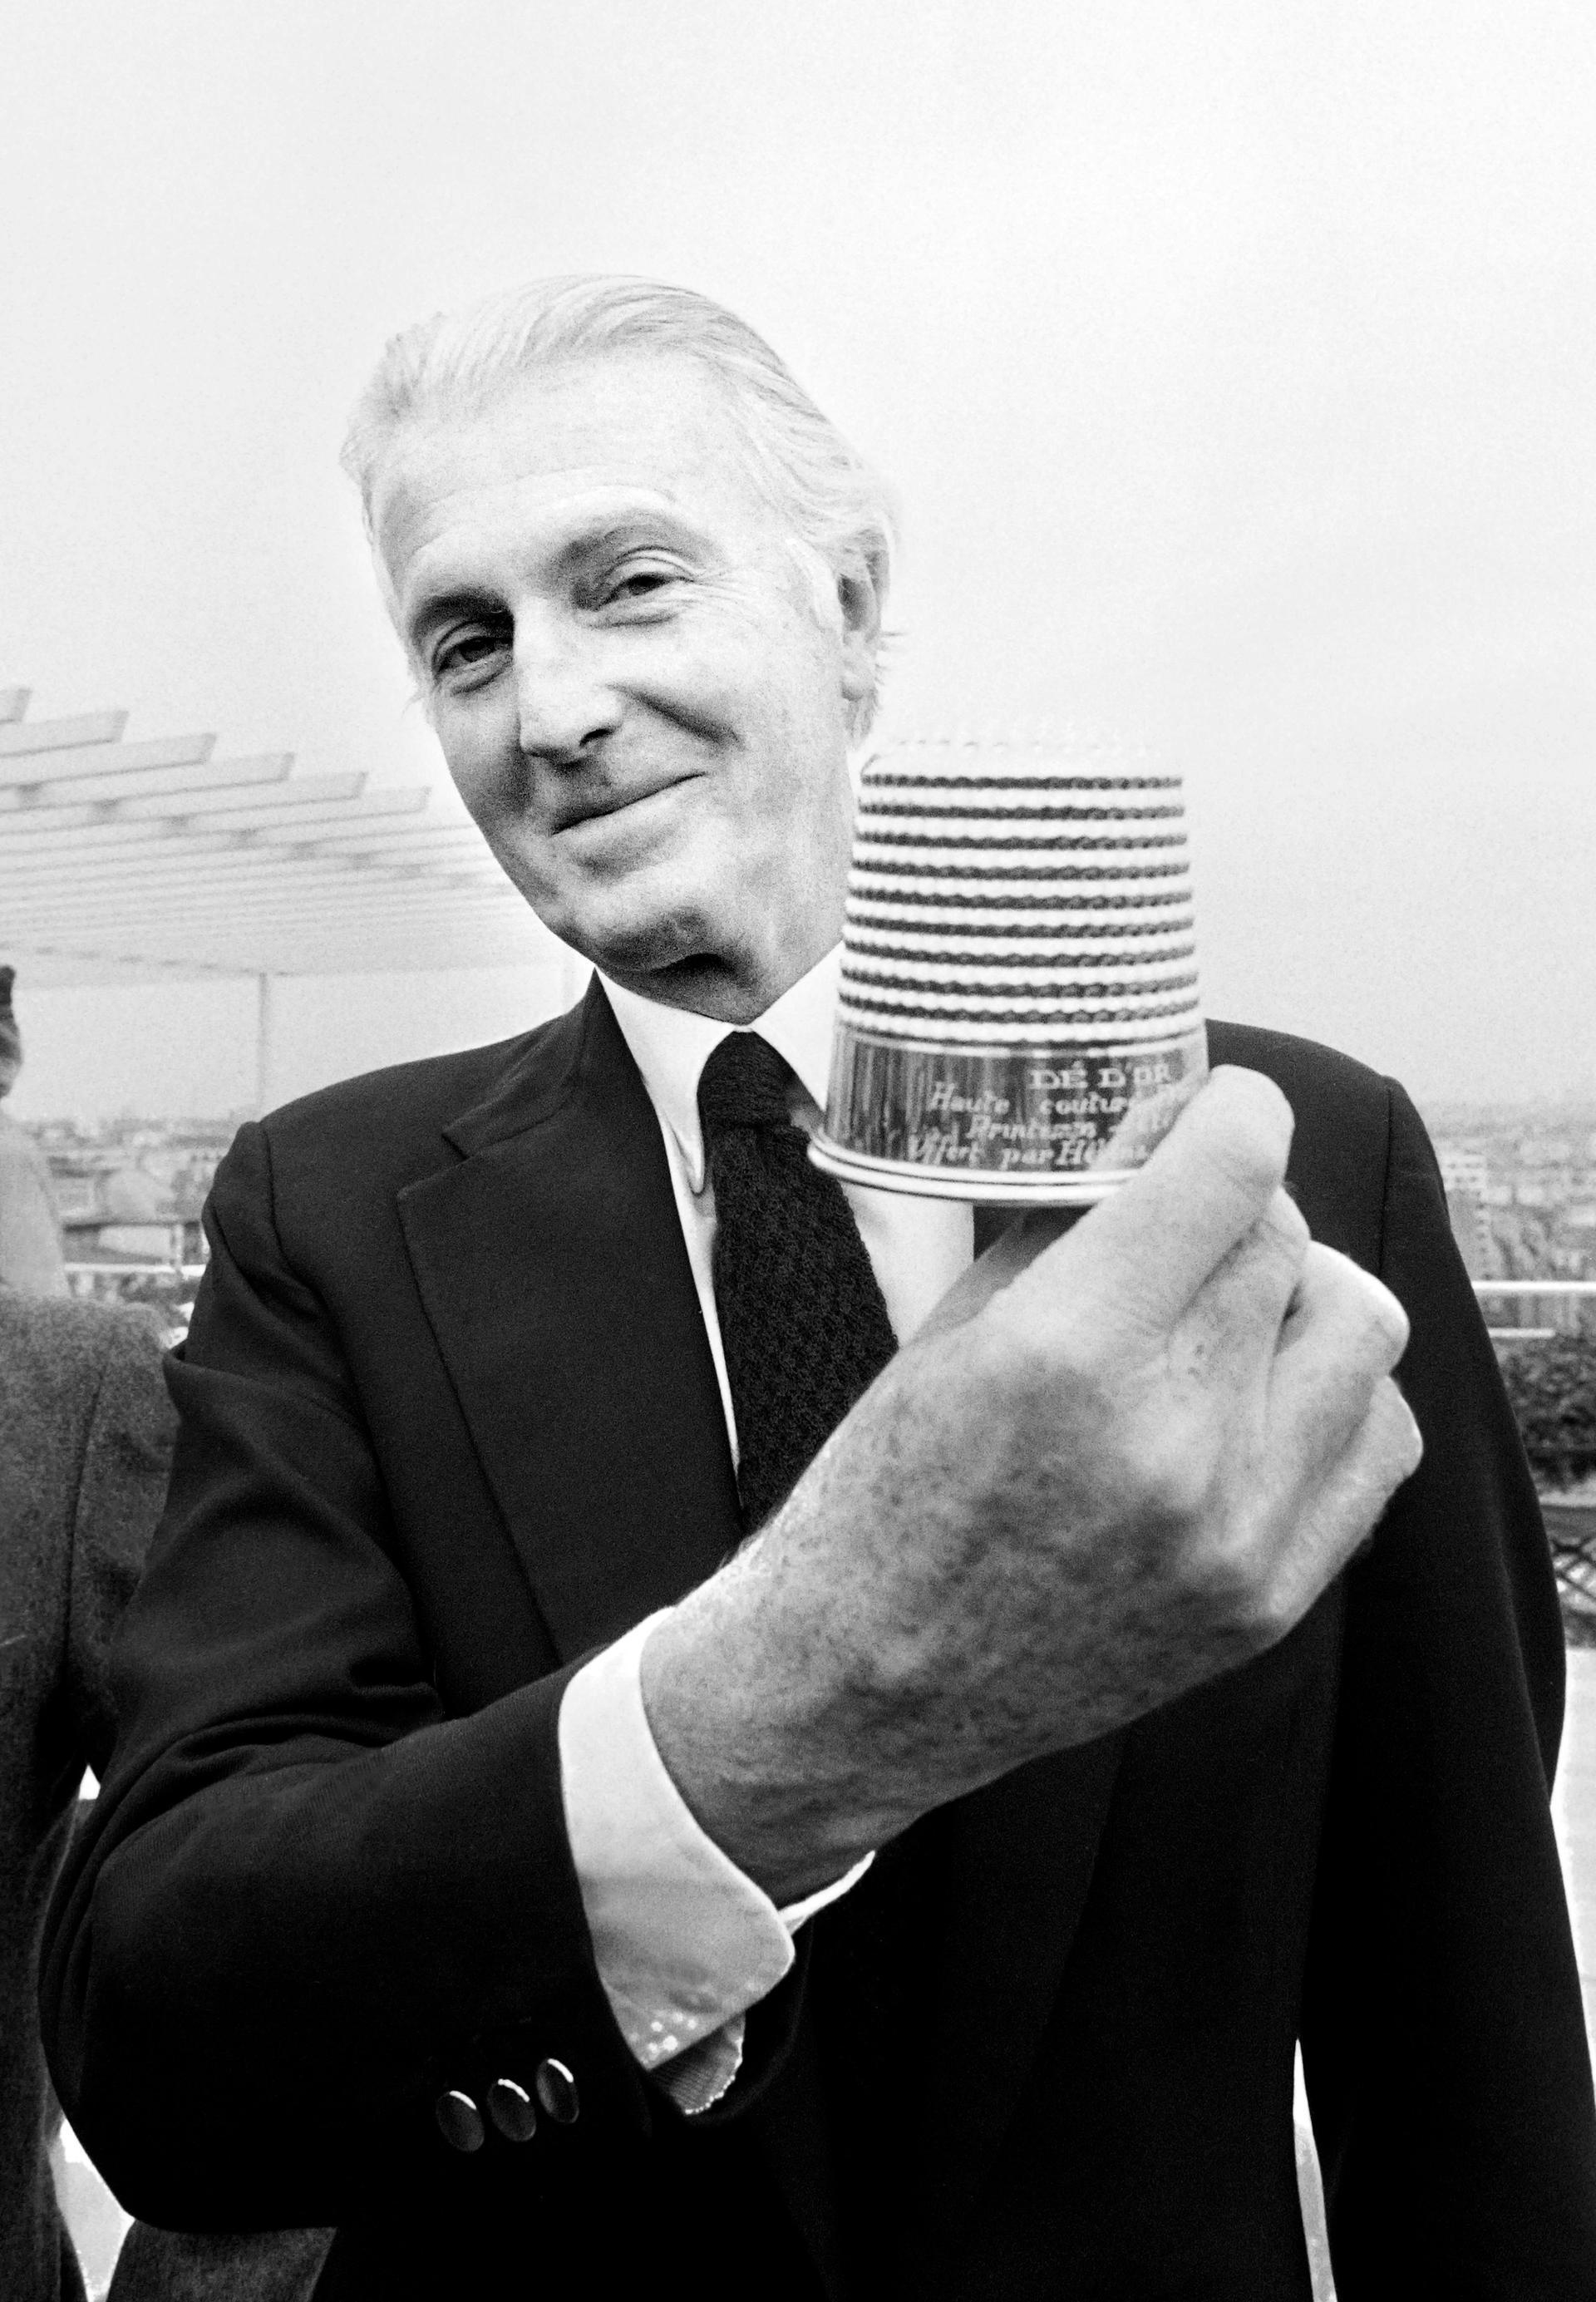 Hubert de Givenchy dies aged 91